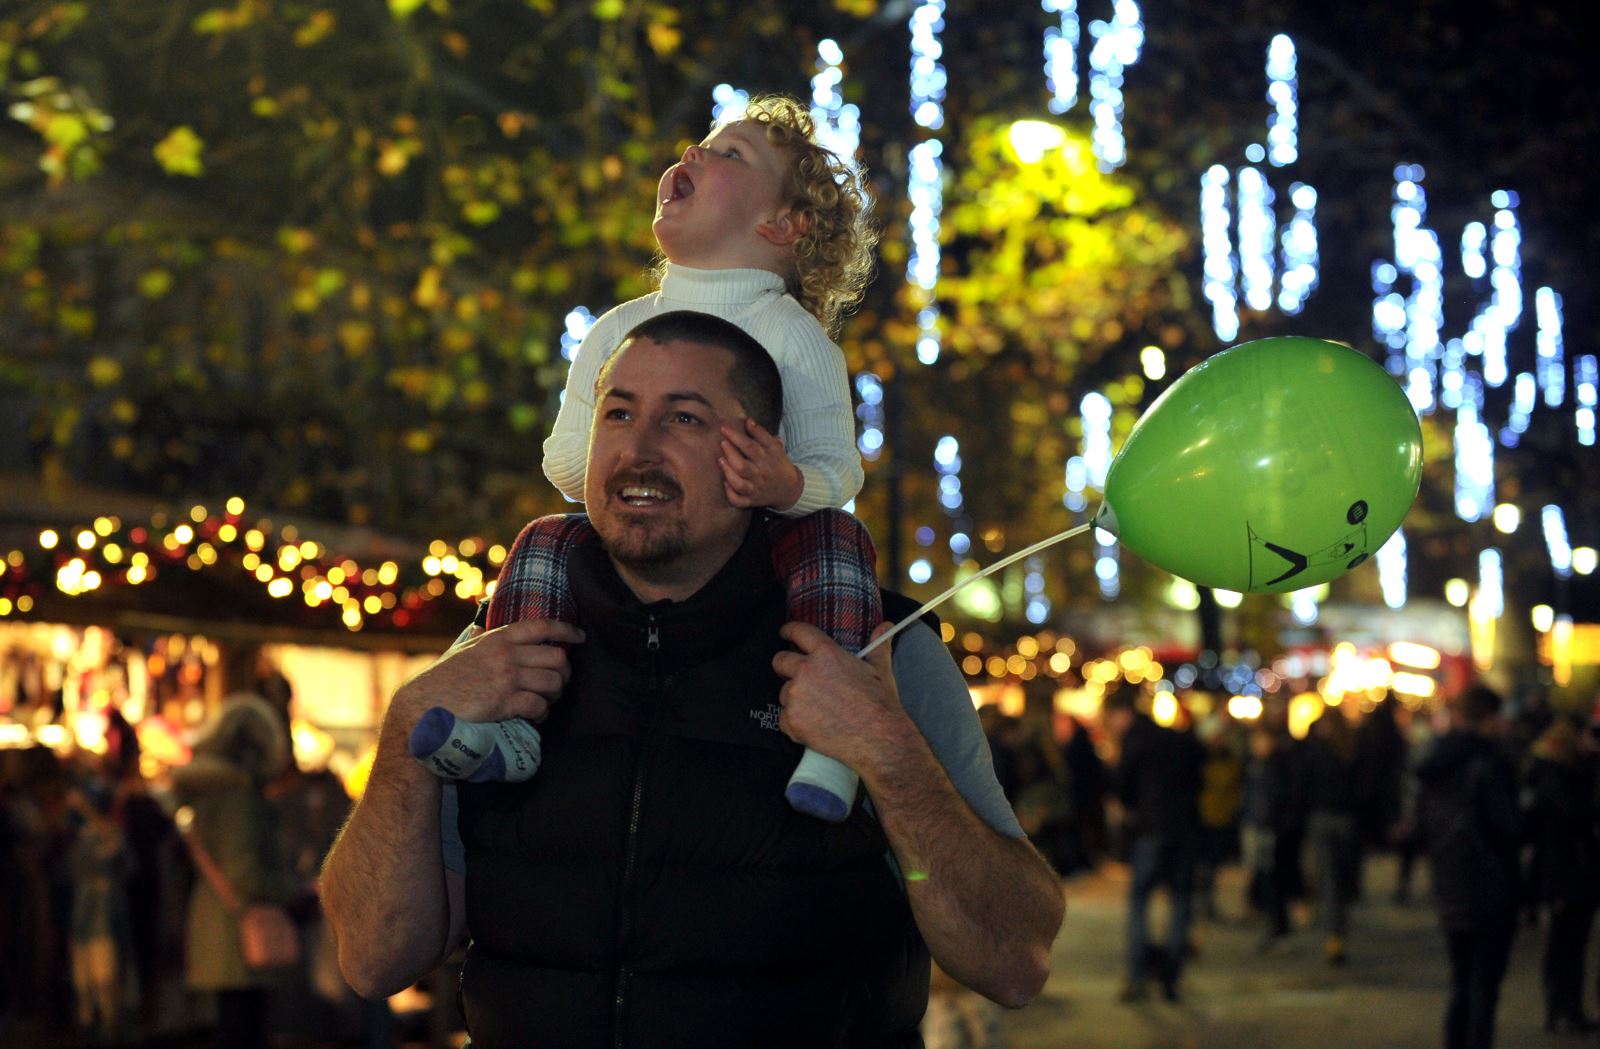 Child on father's shoulder enjoying Christmas lights